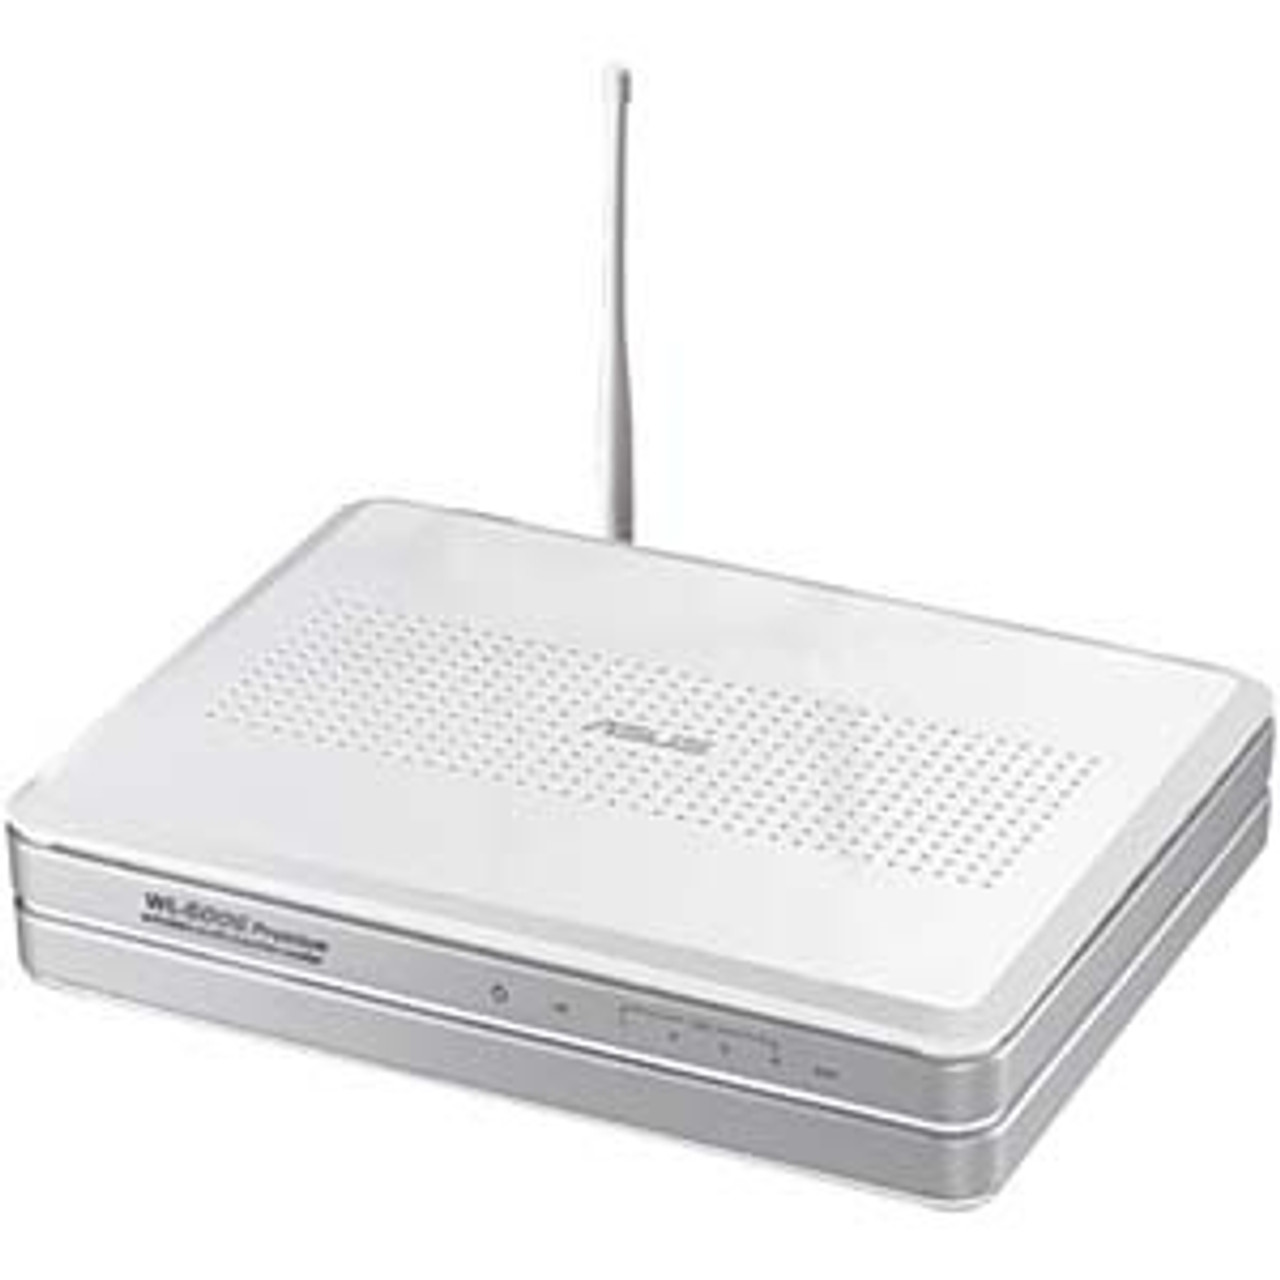 90-I9D002E02-01PZ ASUS WL-500g Premium Wireless Router (Refurbished)